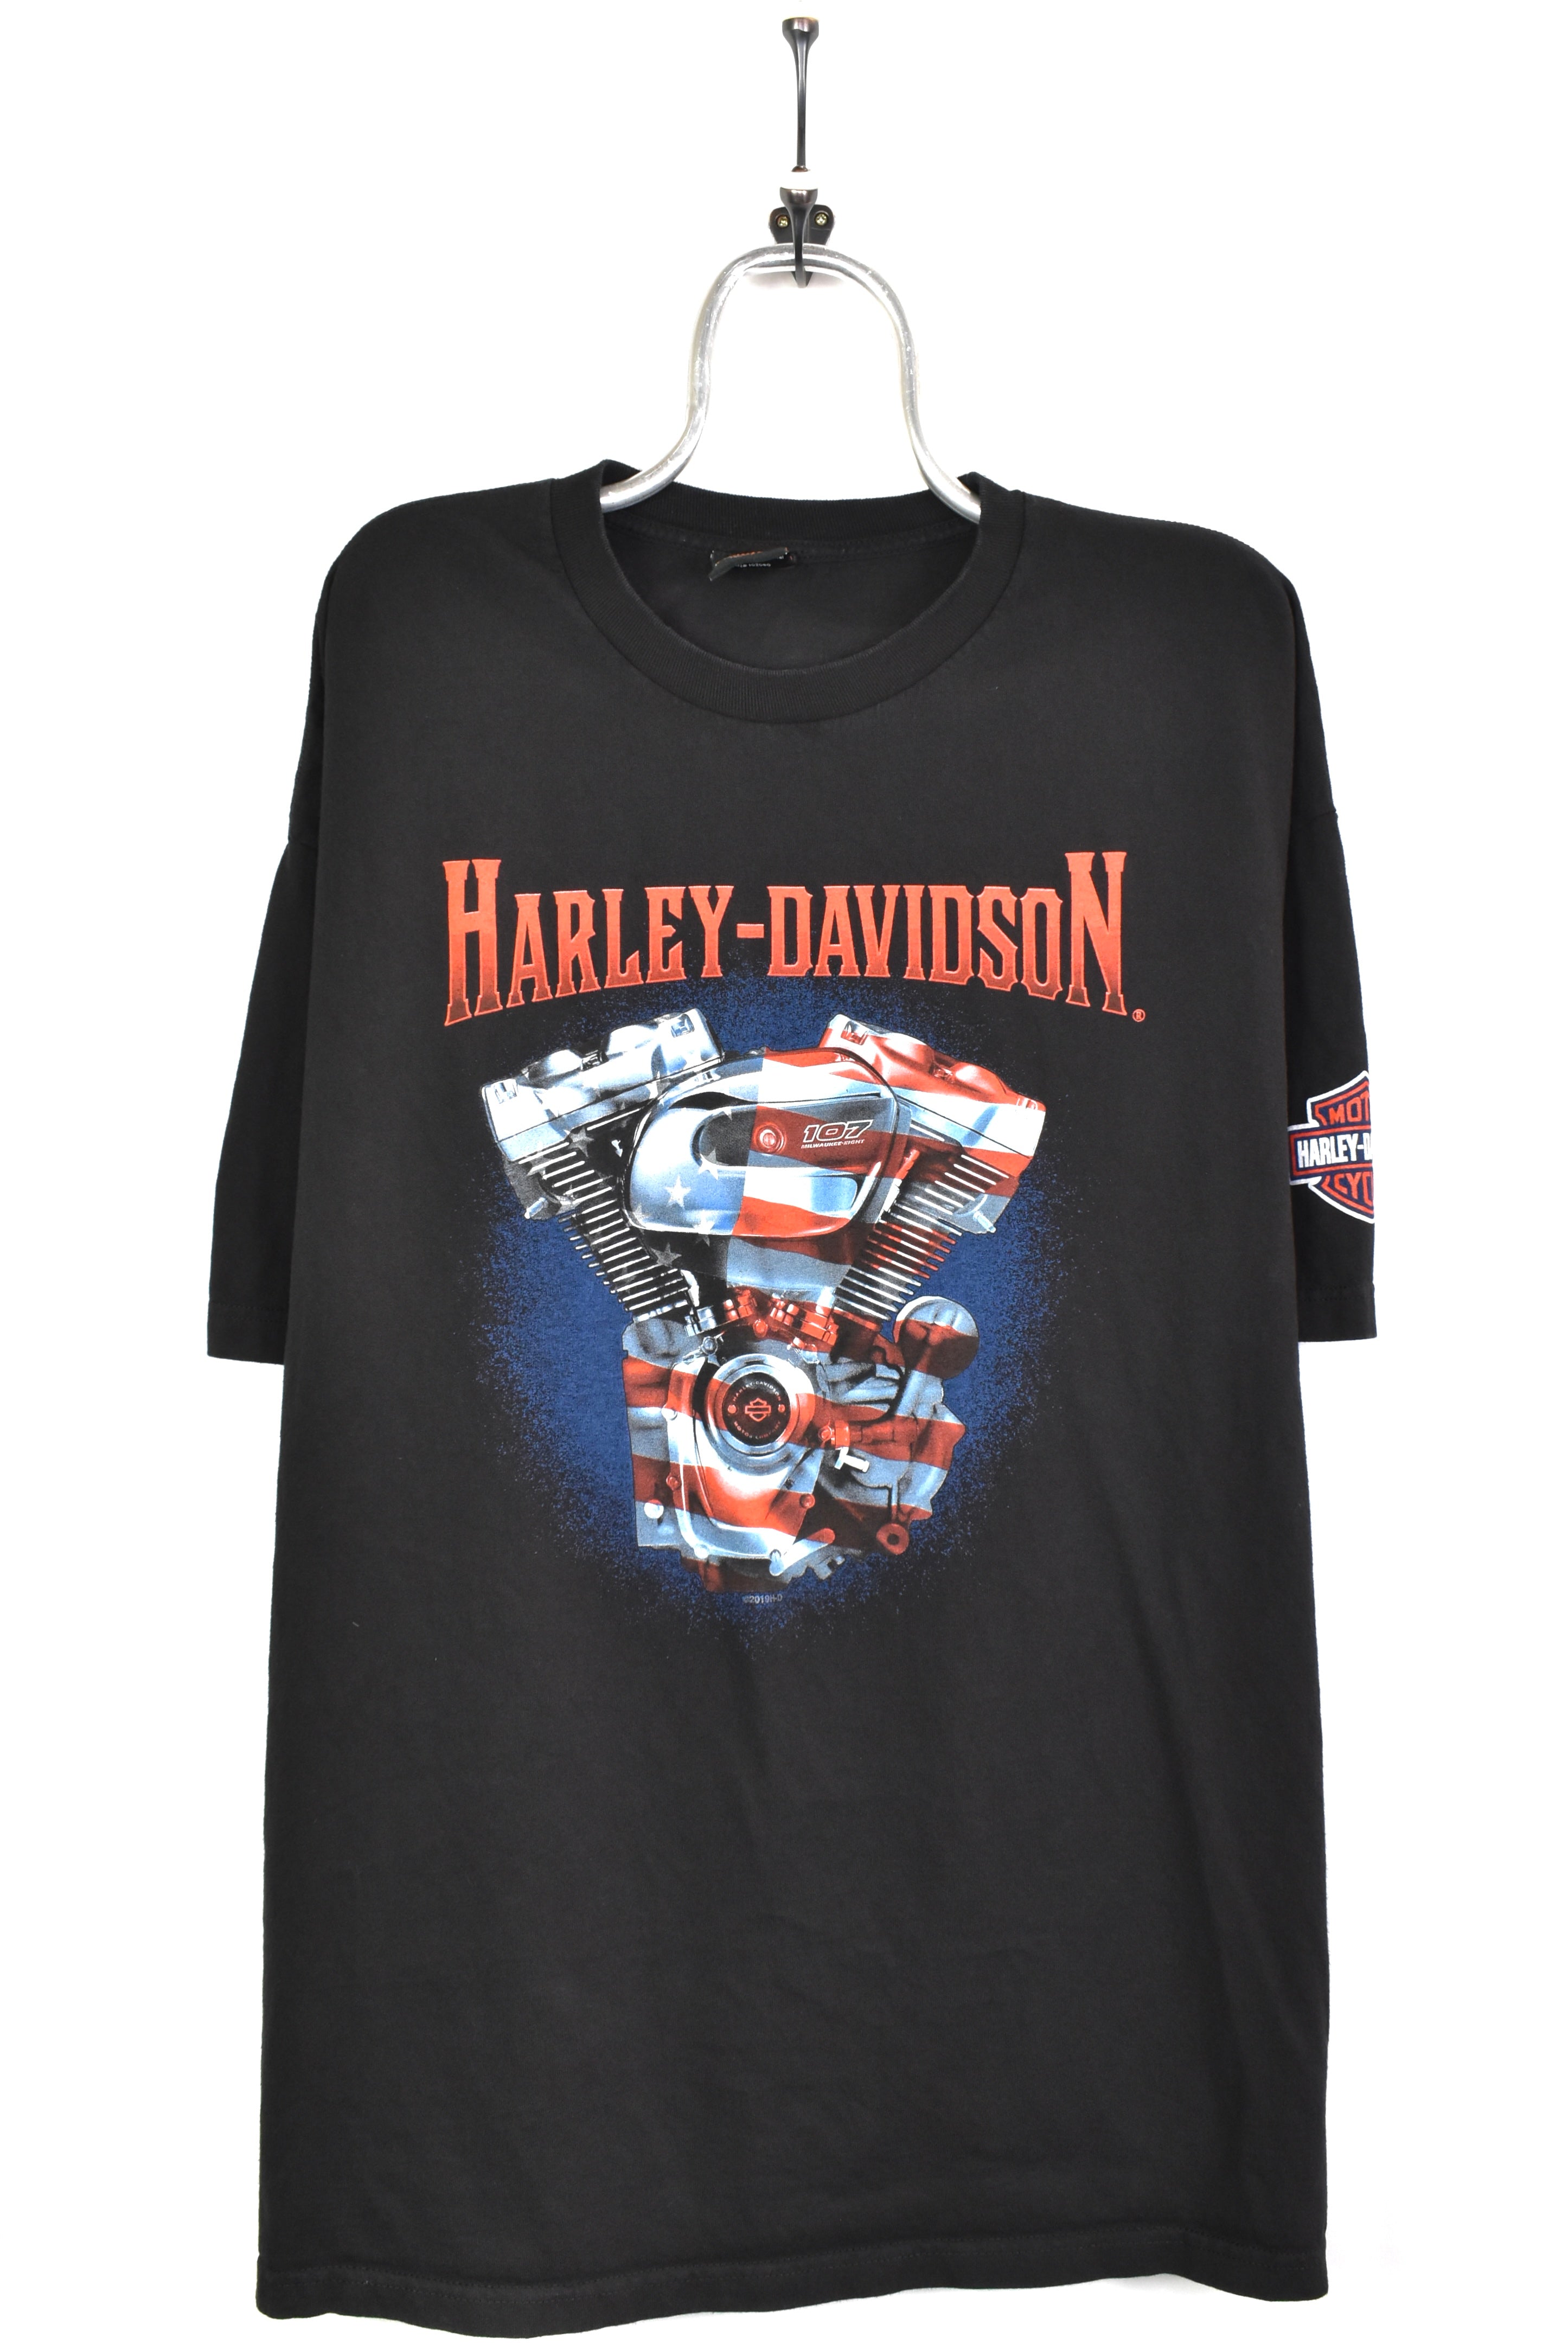 harley davidson jamaica T shirts size M-